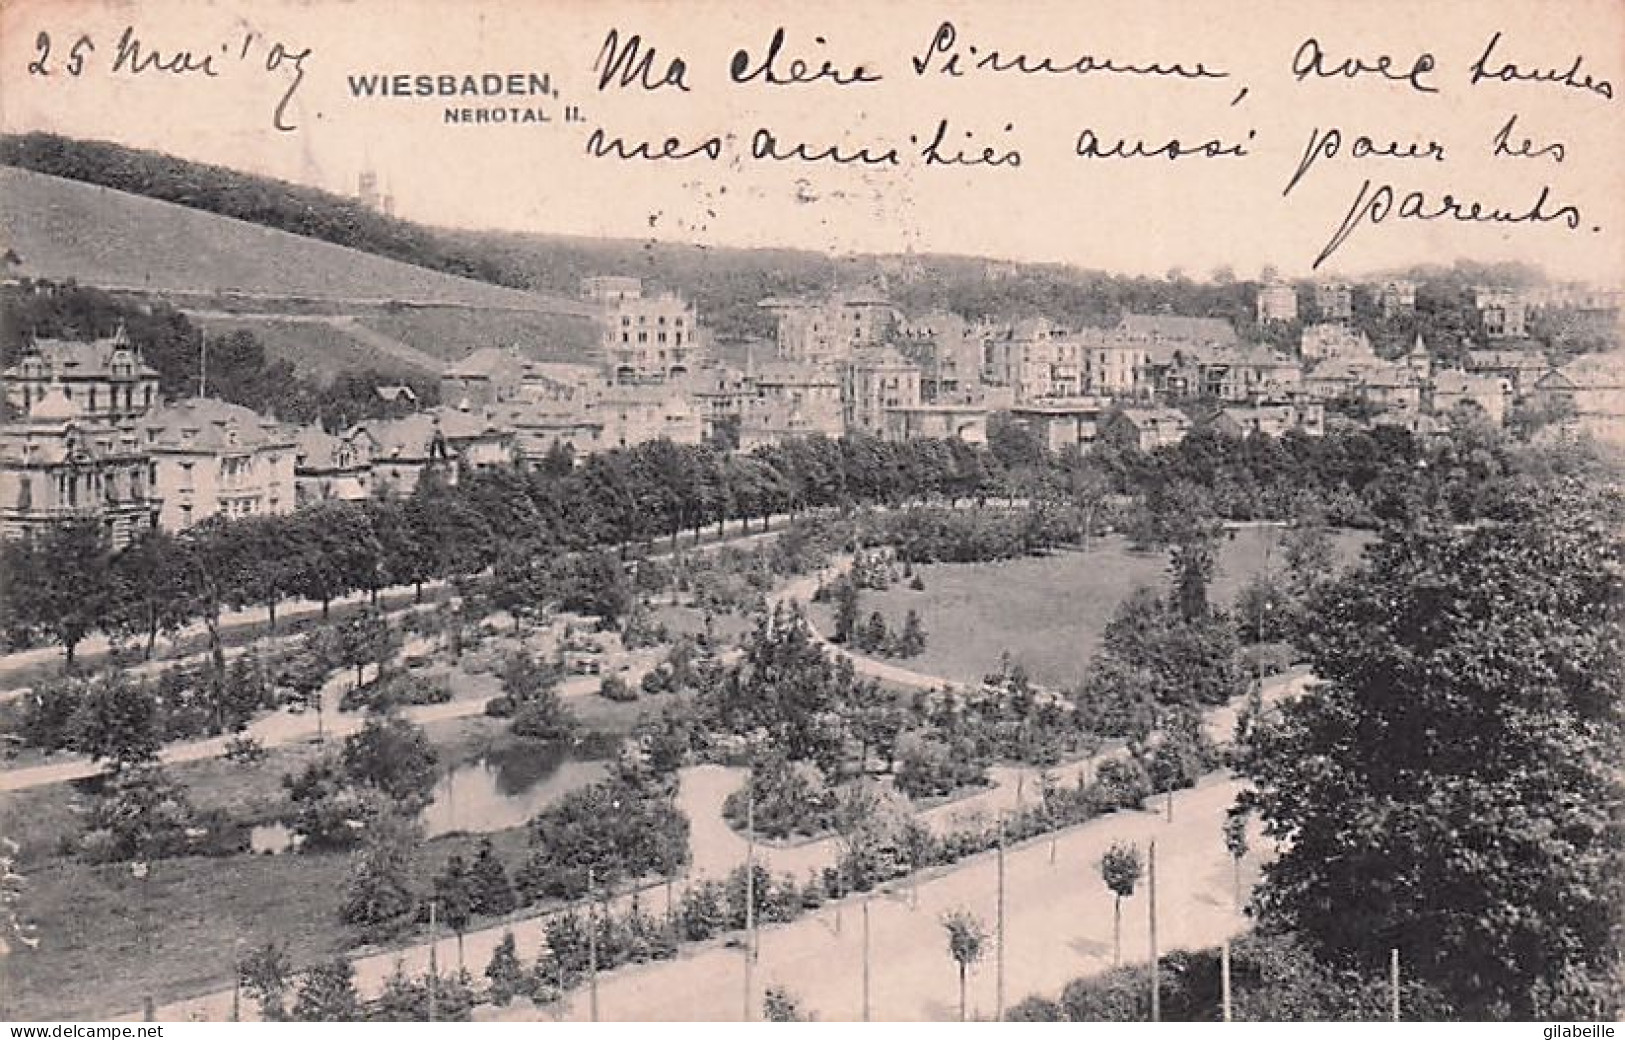  WIESBADEN  -   Nerotal II - 1907 - Wiesbaden